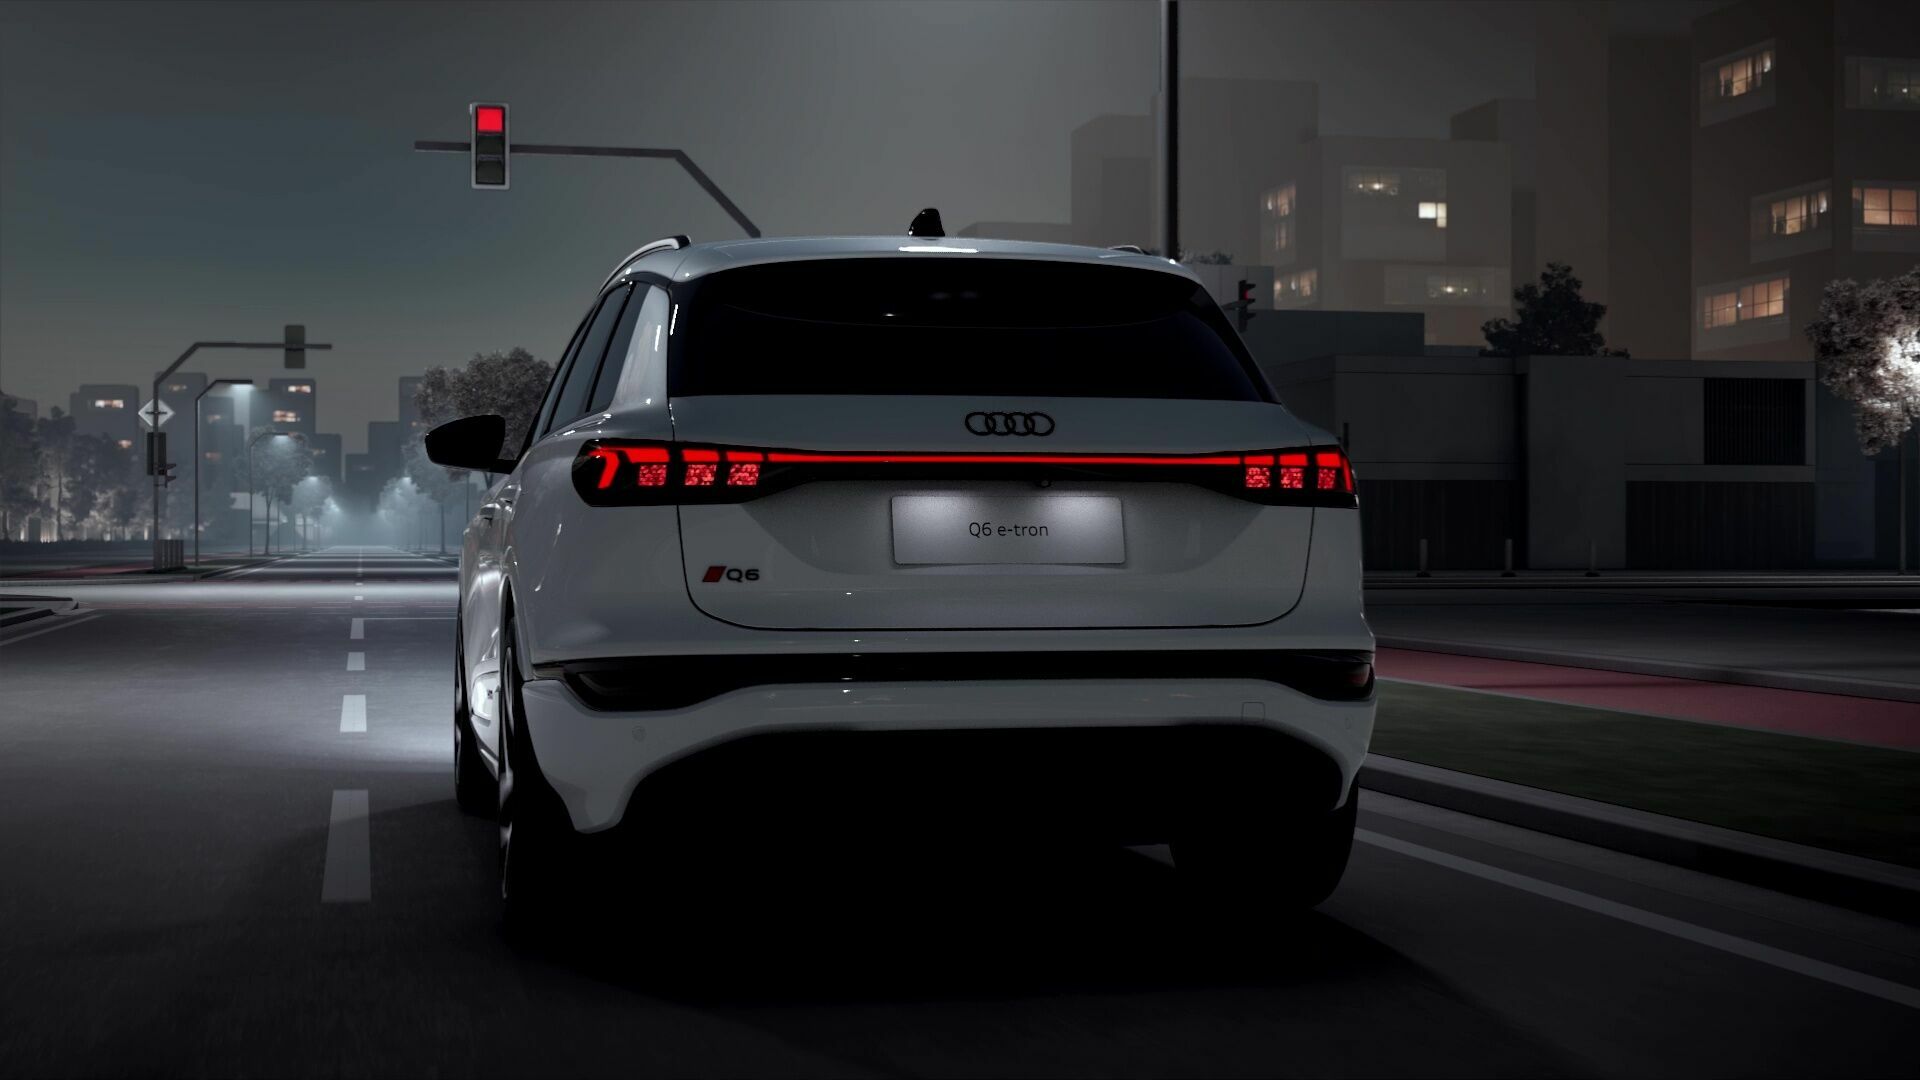 Audi Q6 e-tron – Digital OLED rear lights – Animation